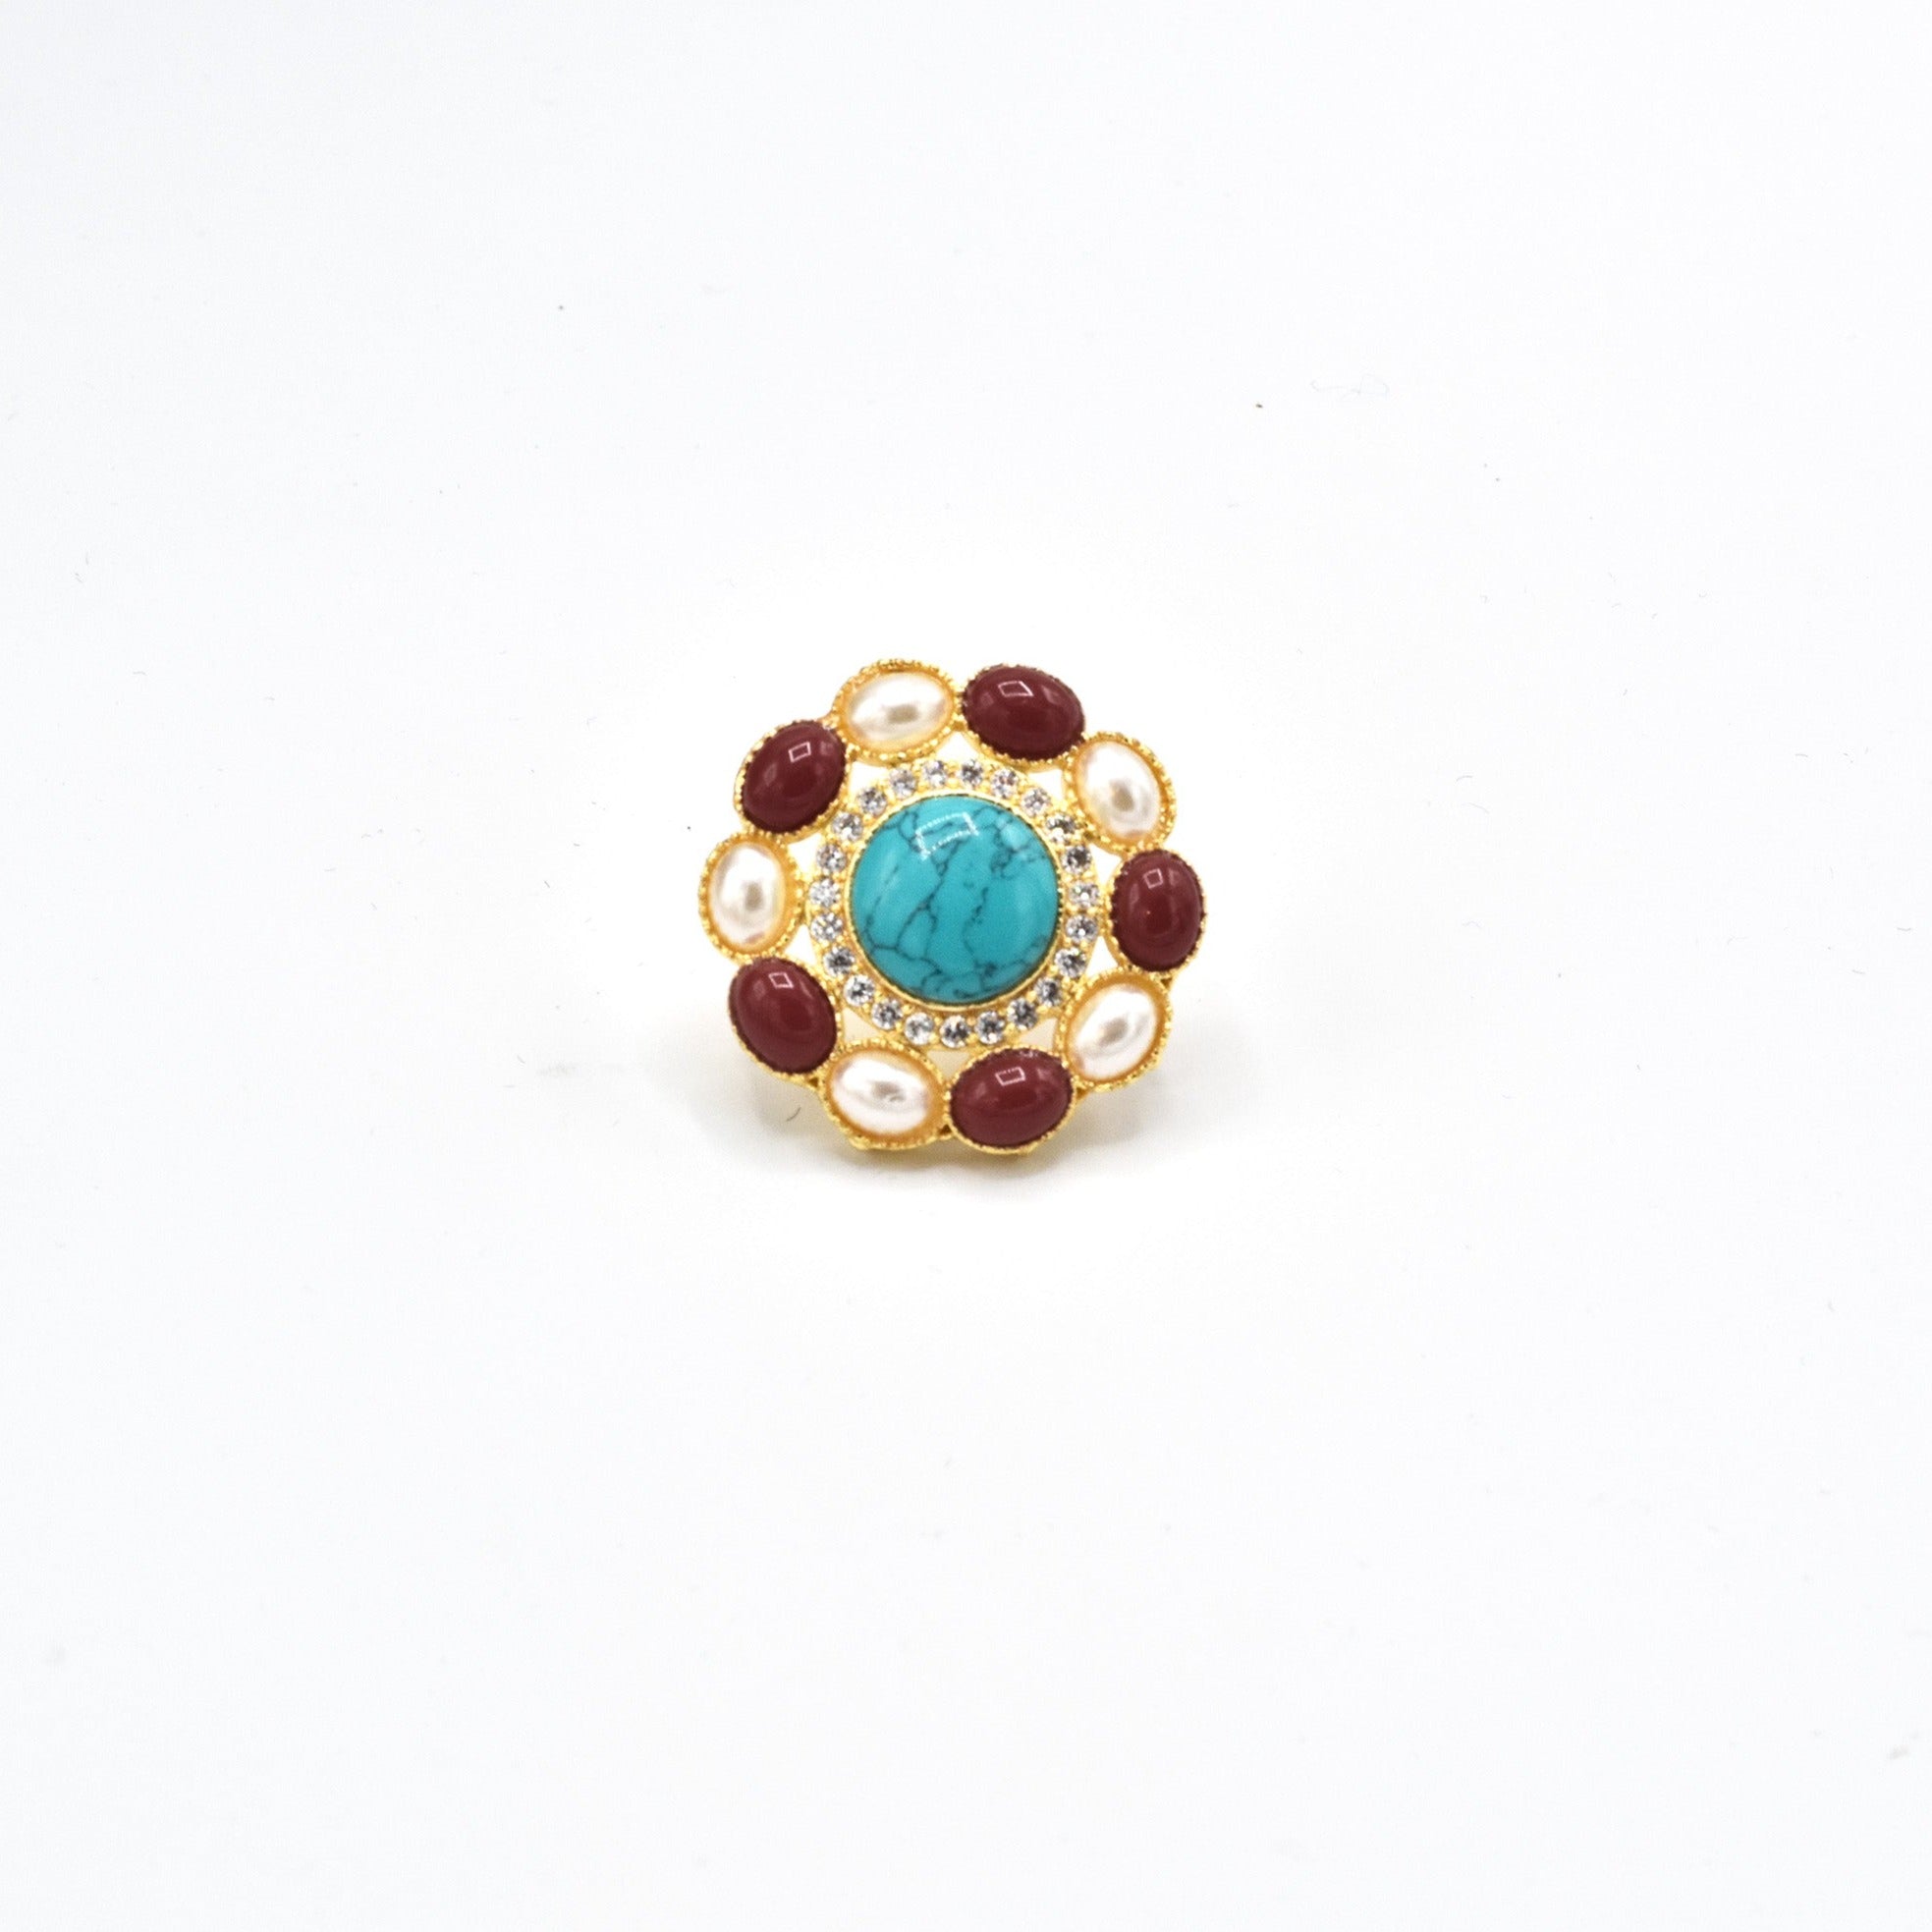 Chavvi Turquoise Stone Fusion Ring - The Pashm